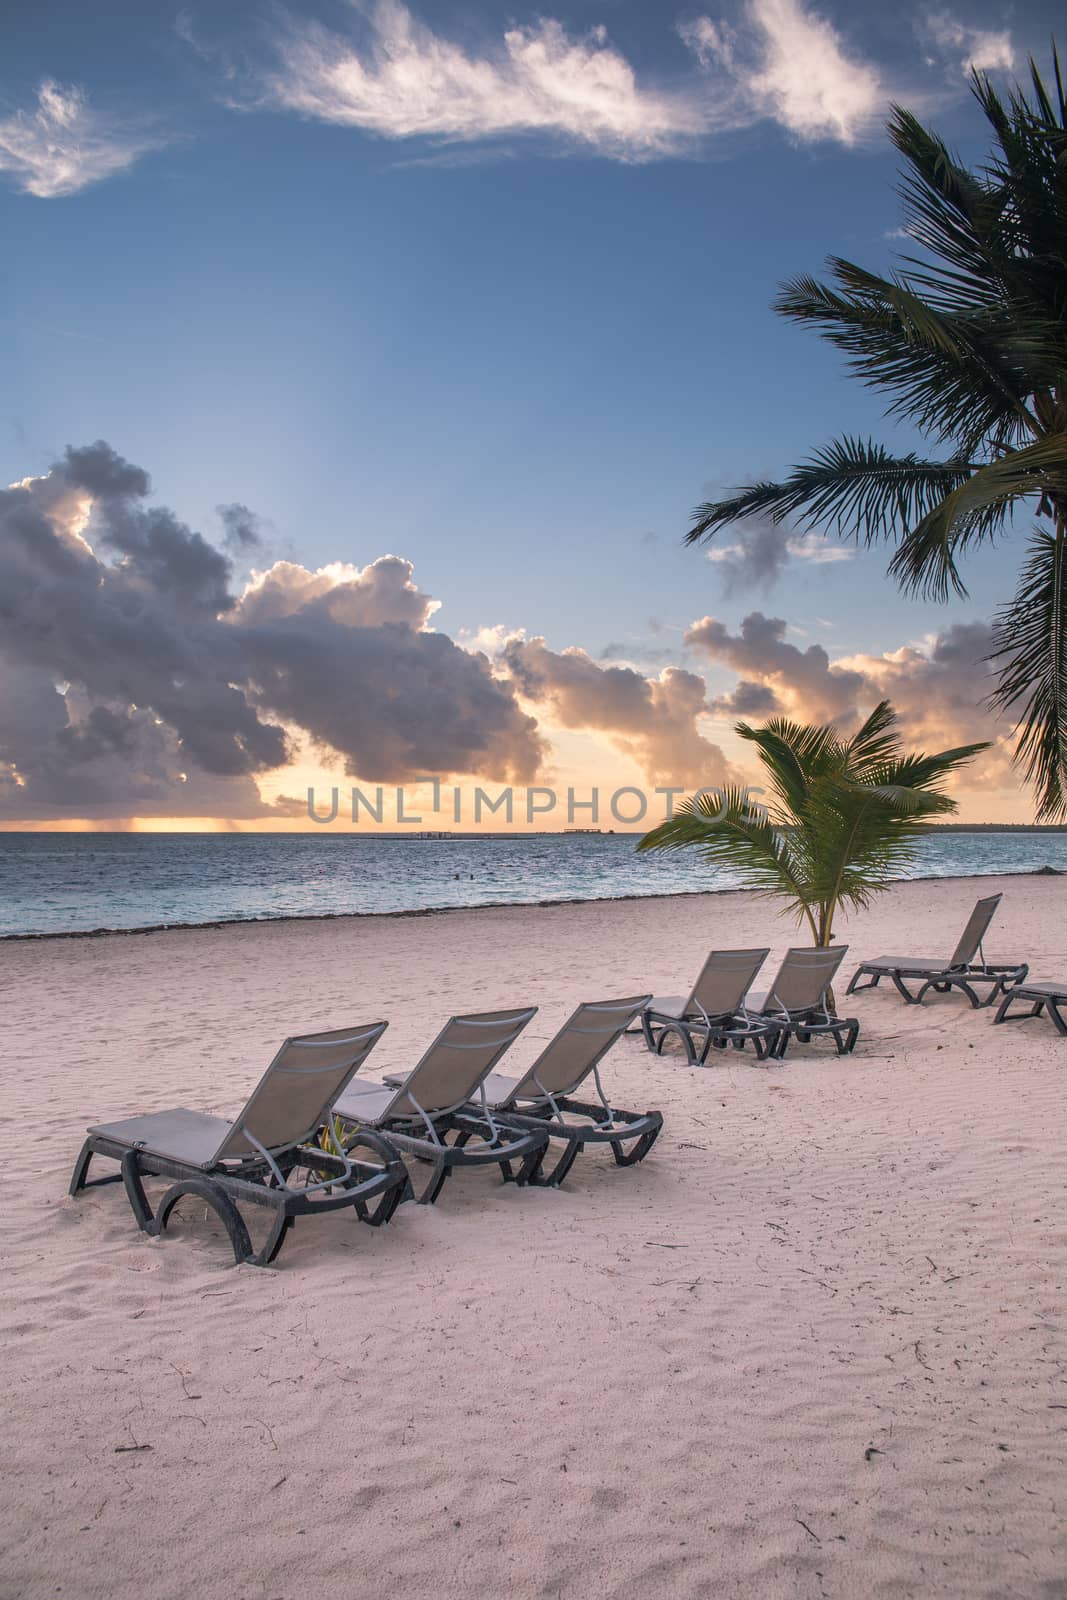 Sunrise on a Caribbean beach with sunbeds and palm trees